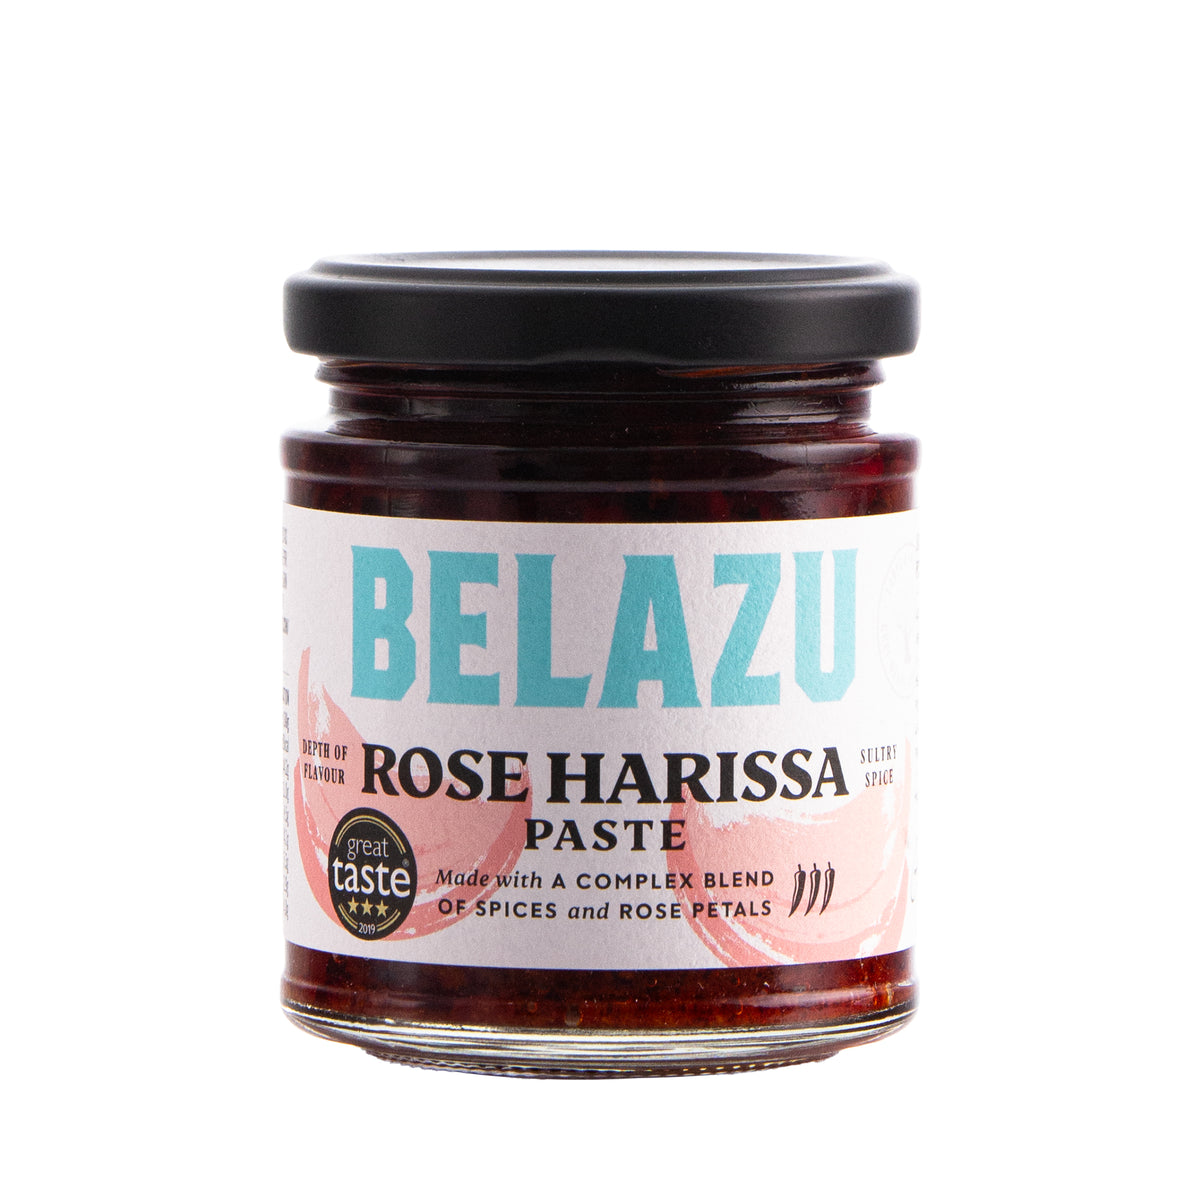 Rose Harissa, Belazu